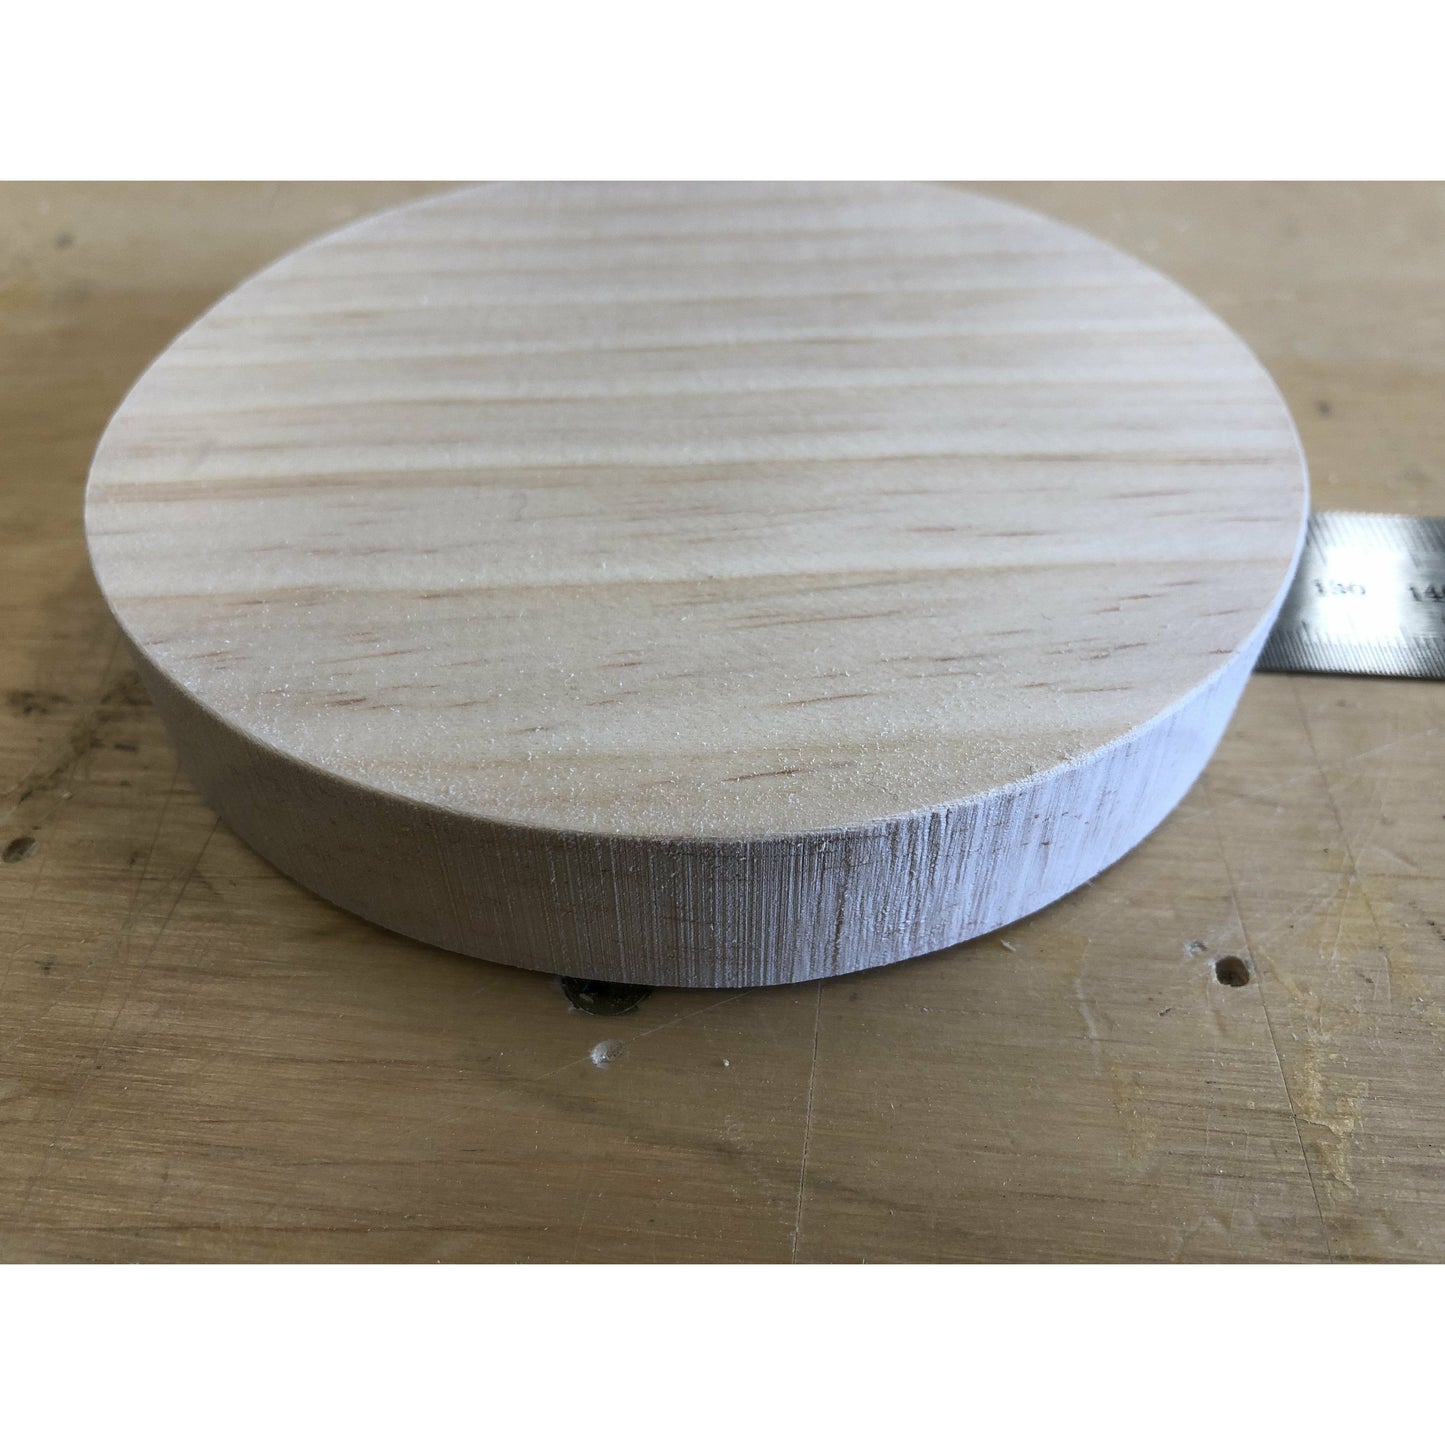 Solid Pine Craft Blank - Circle (14cm)